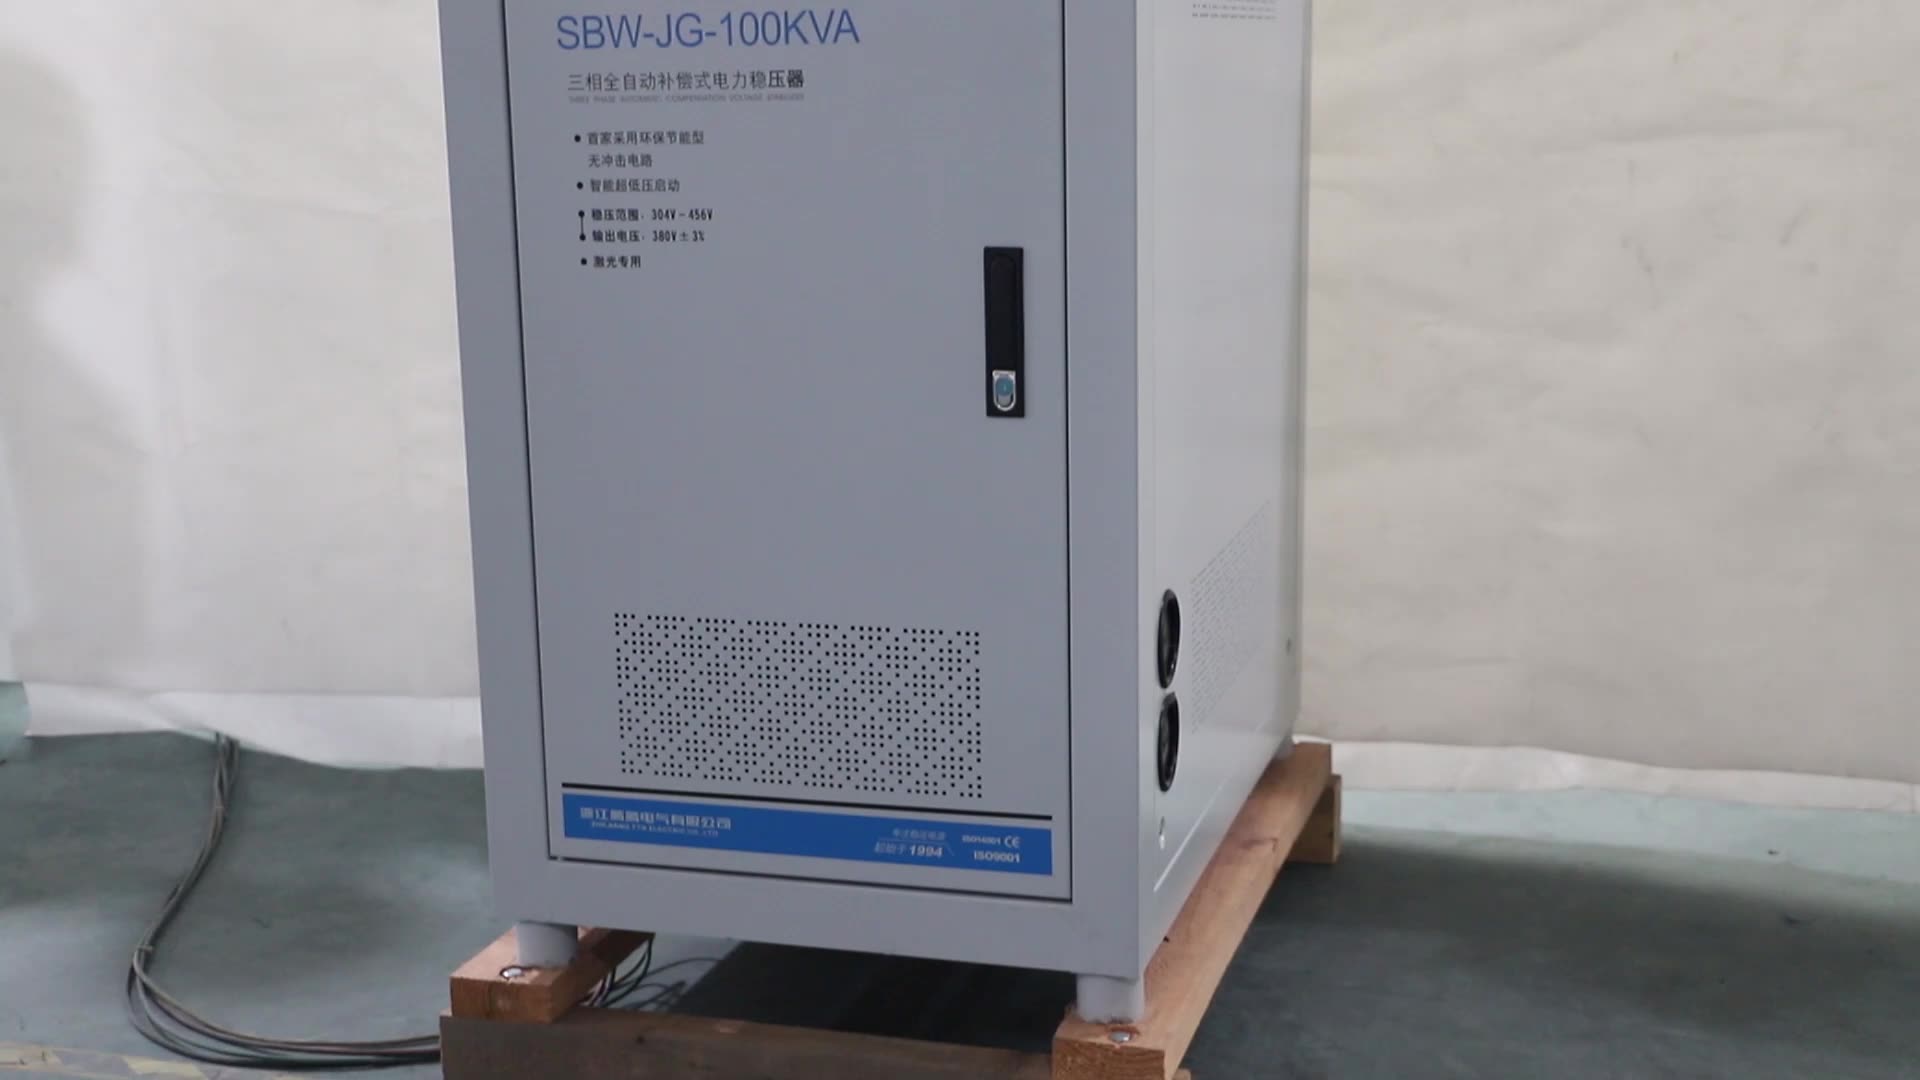 Industrial Svc PCSVC-15000VA 15kva Wall Mount Voltage Stabilizer 1 Phase Servo Power Voltage Regulator Stabilizers1